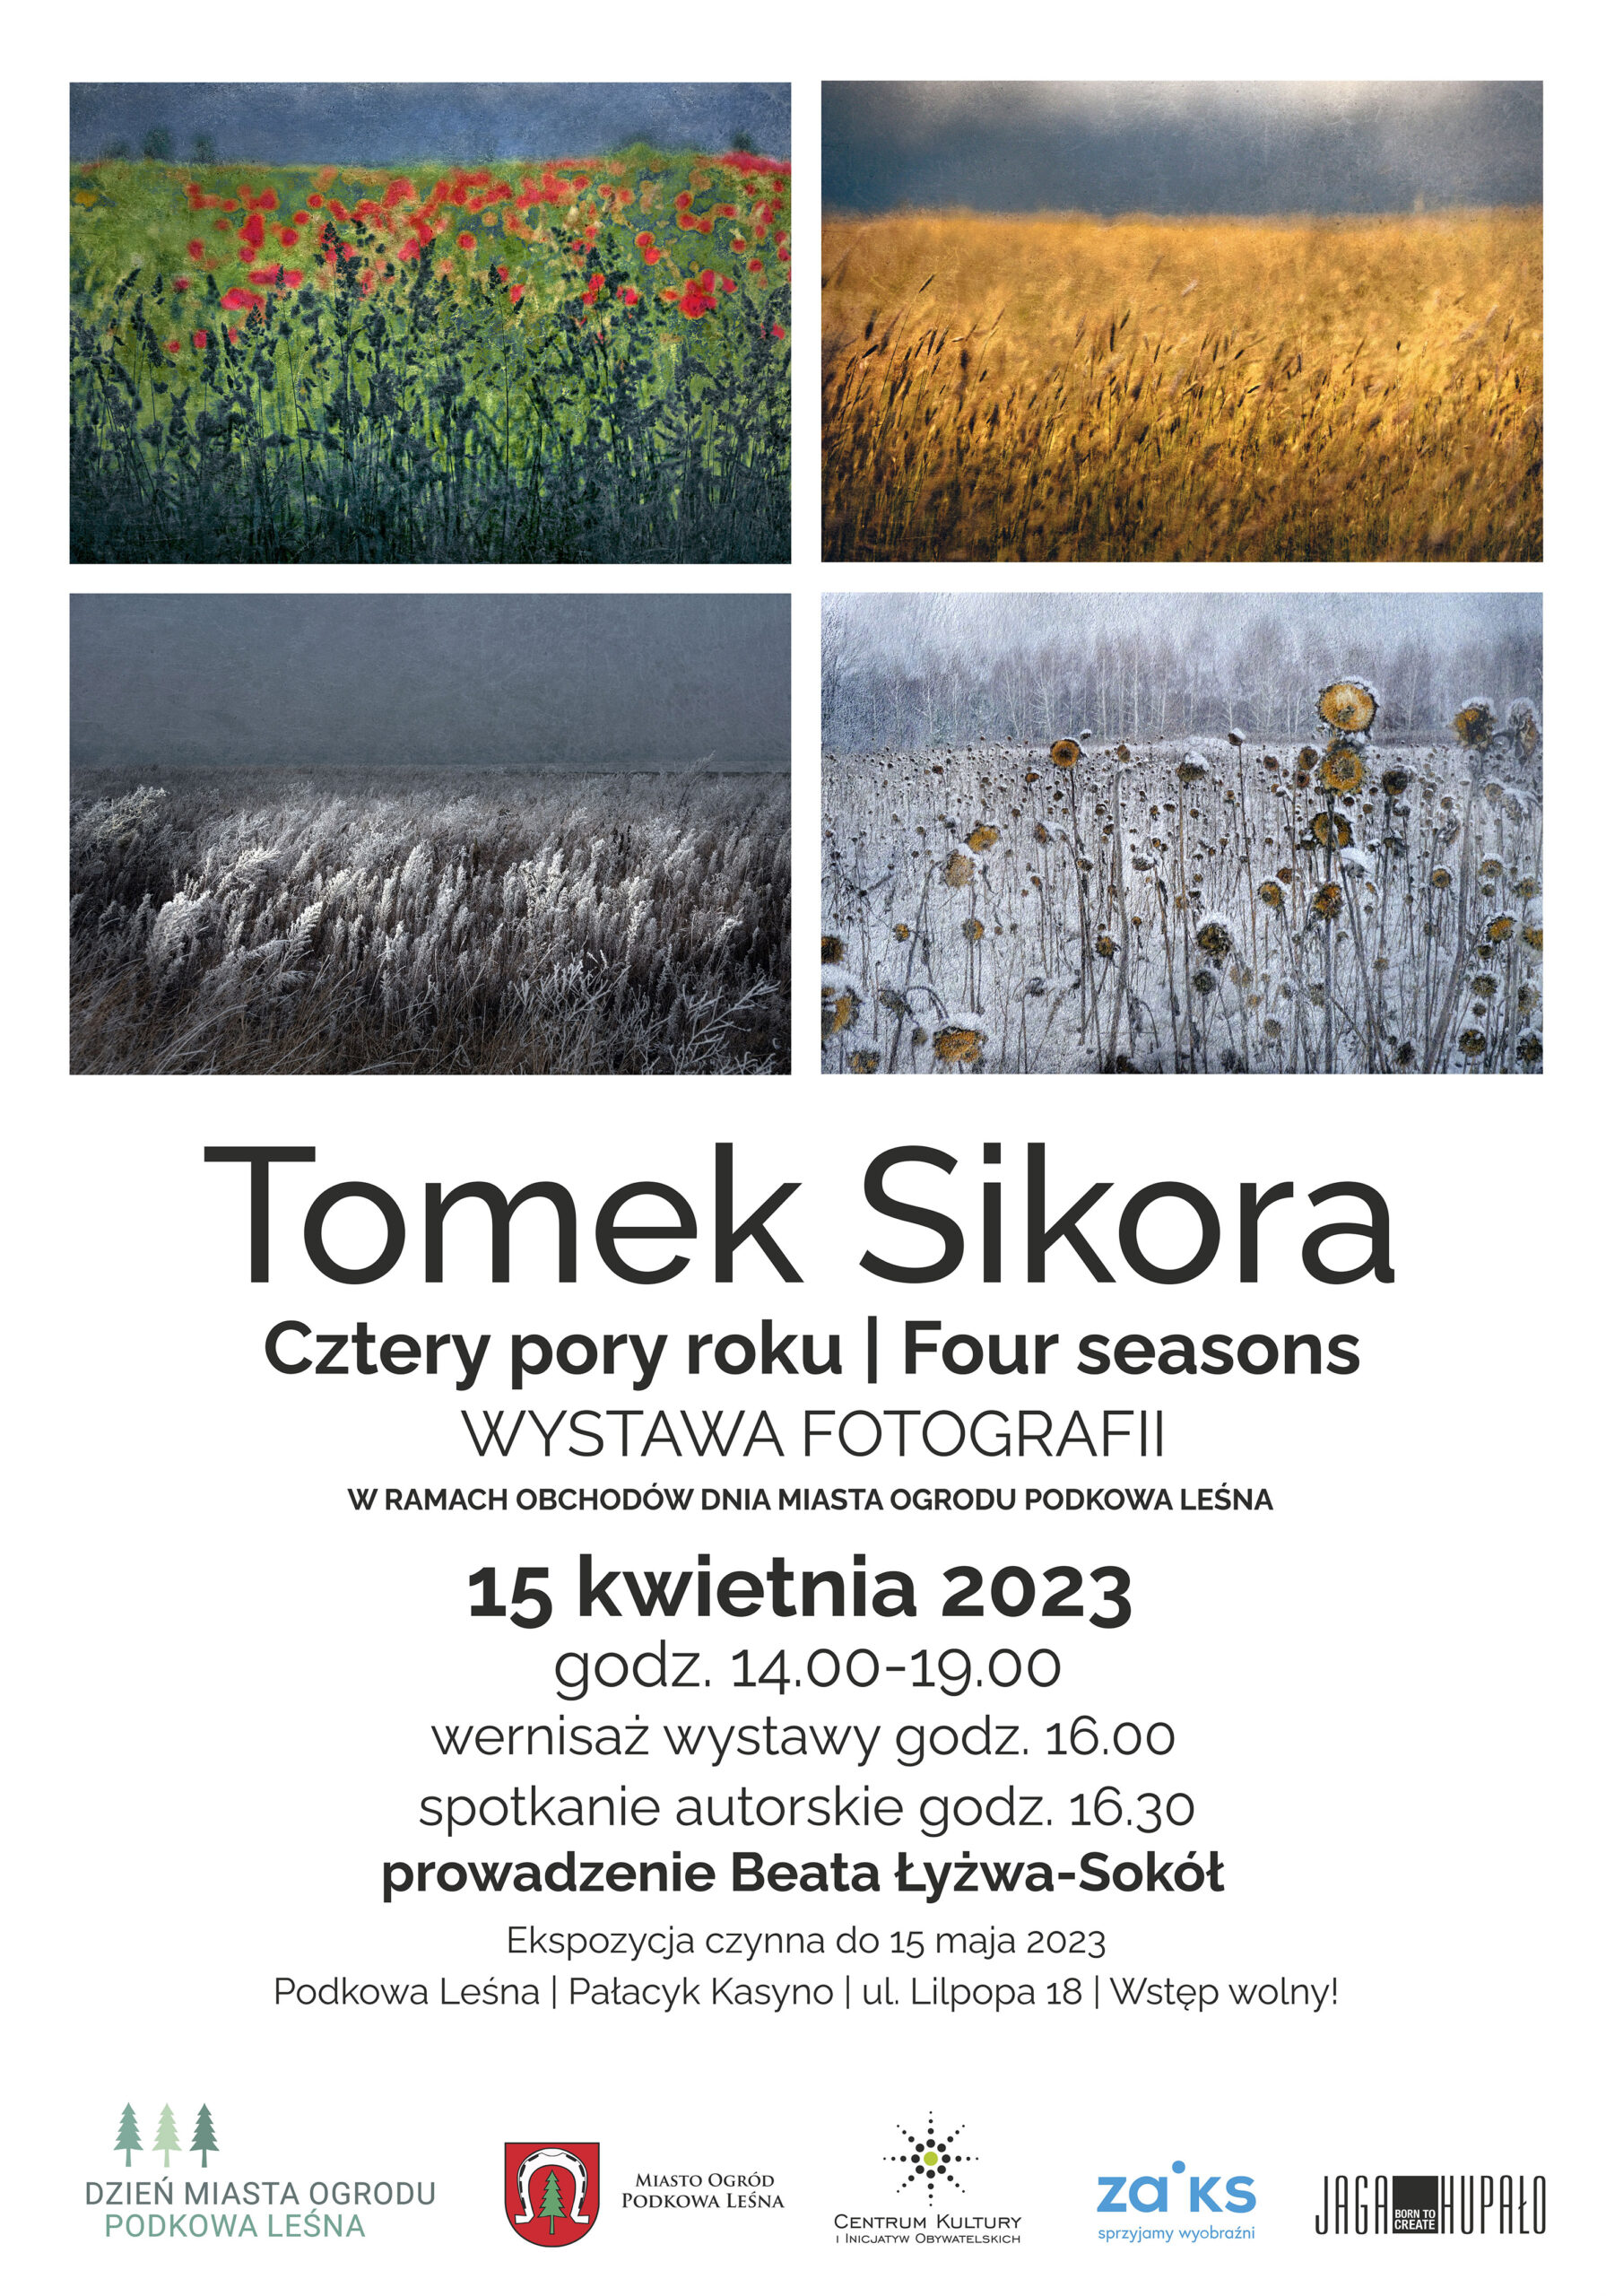 You are currently viewing Cztery pory roku | Four seasons – wystawa fotografii Tomka Sikory